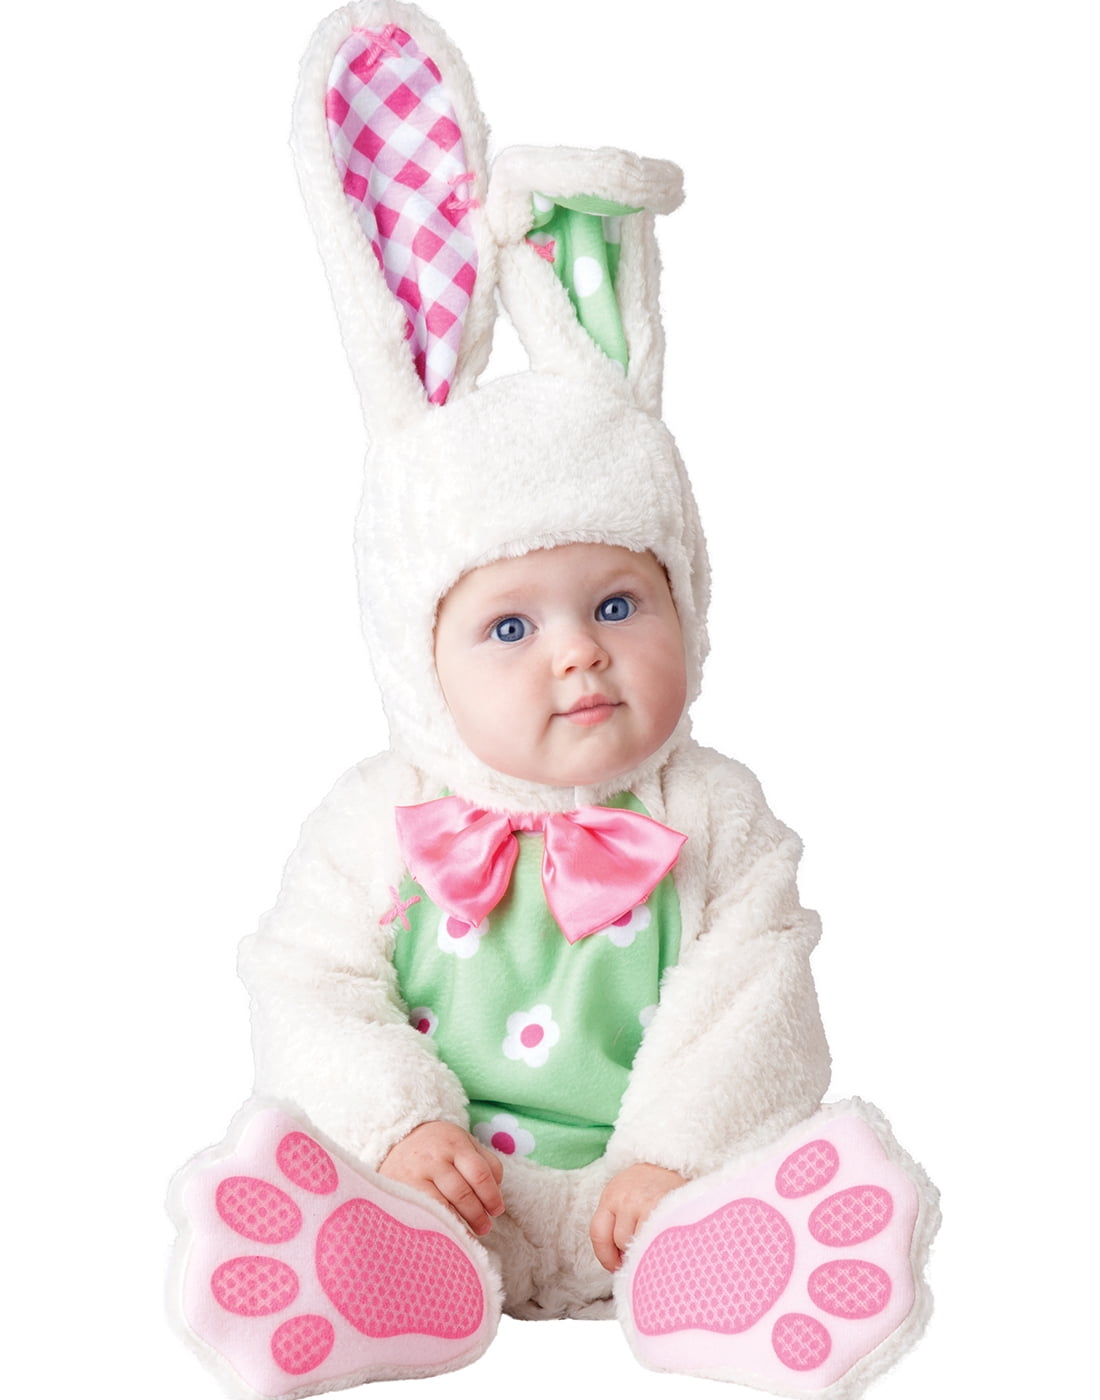 Bunny Costume Baby Toddler Kids Rabbit Fancy Dress